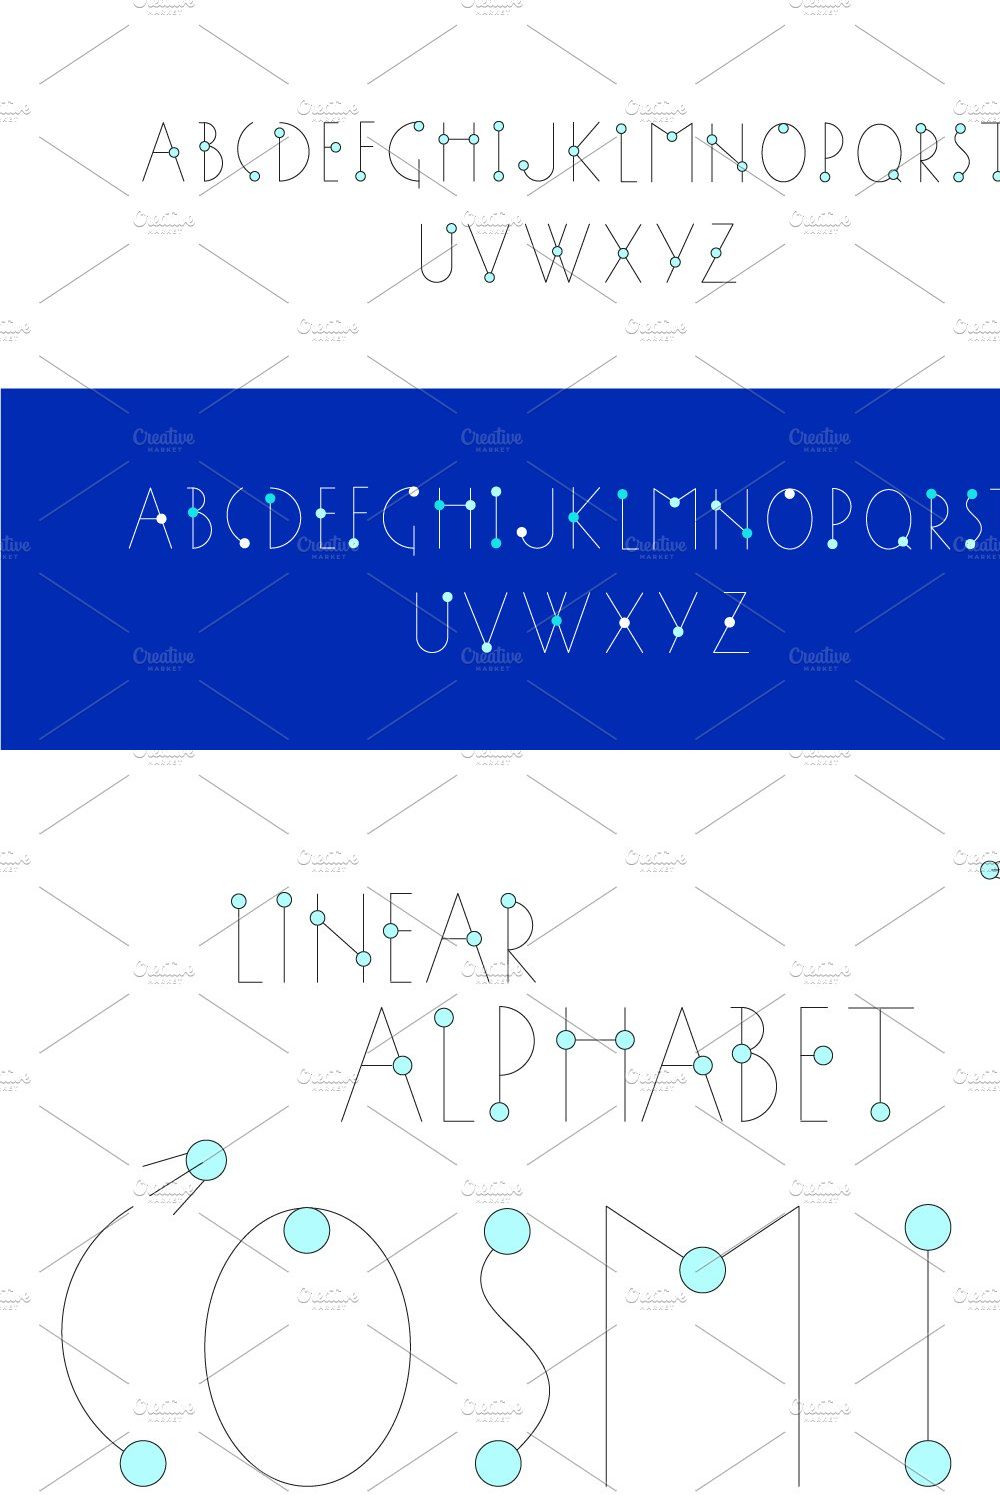 COSMIC alphabet pinterest preview image.